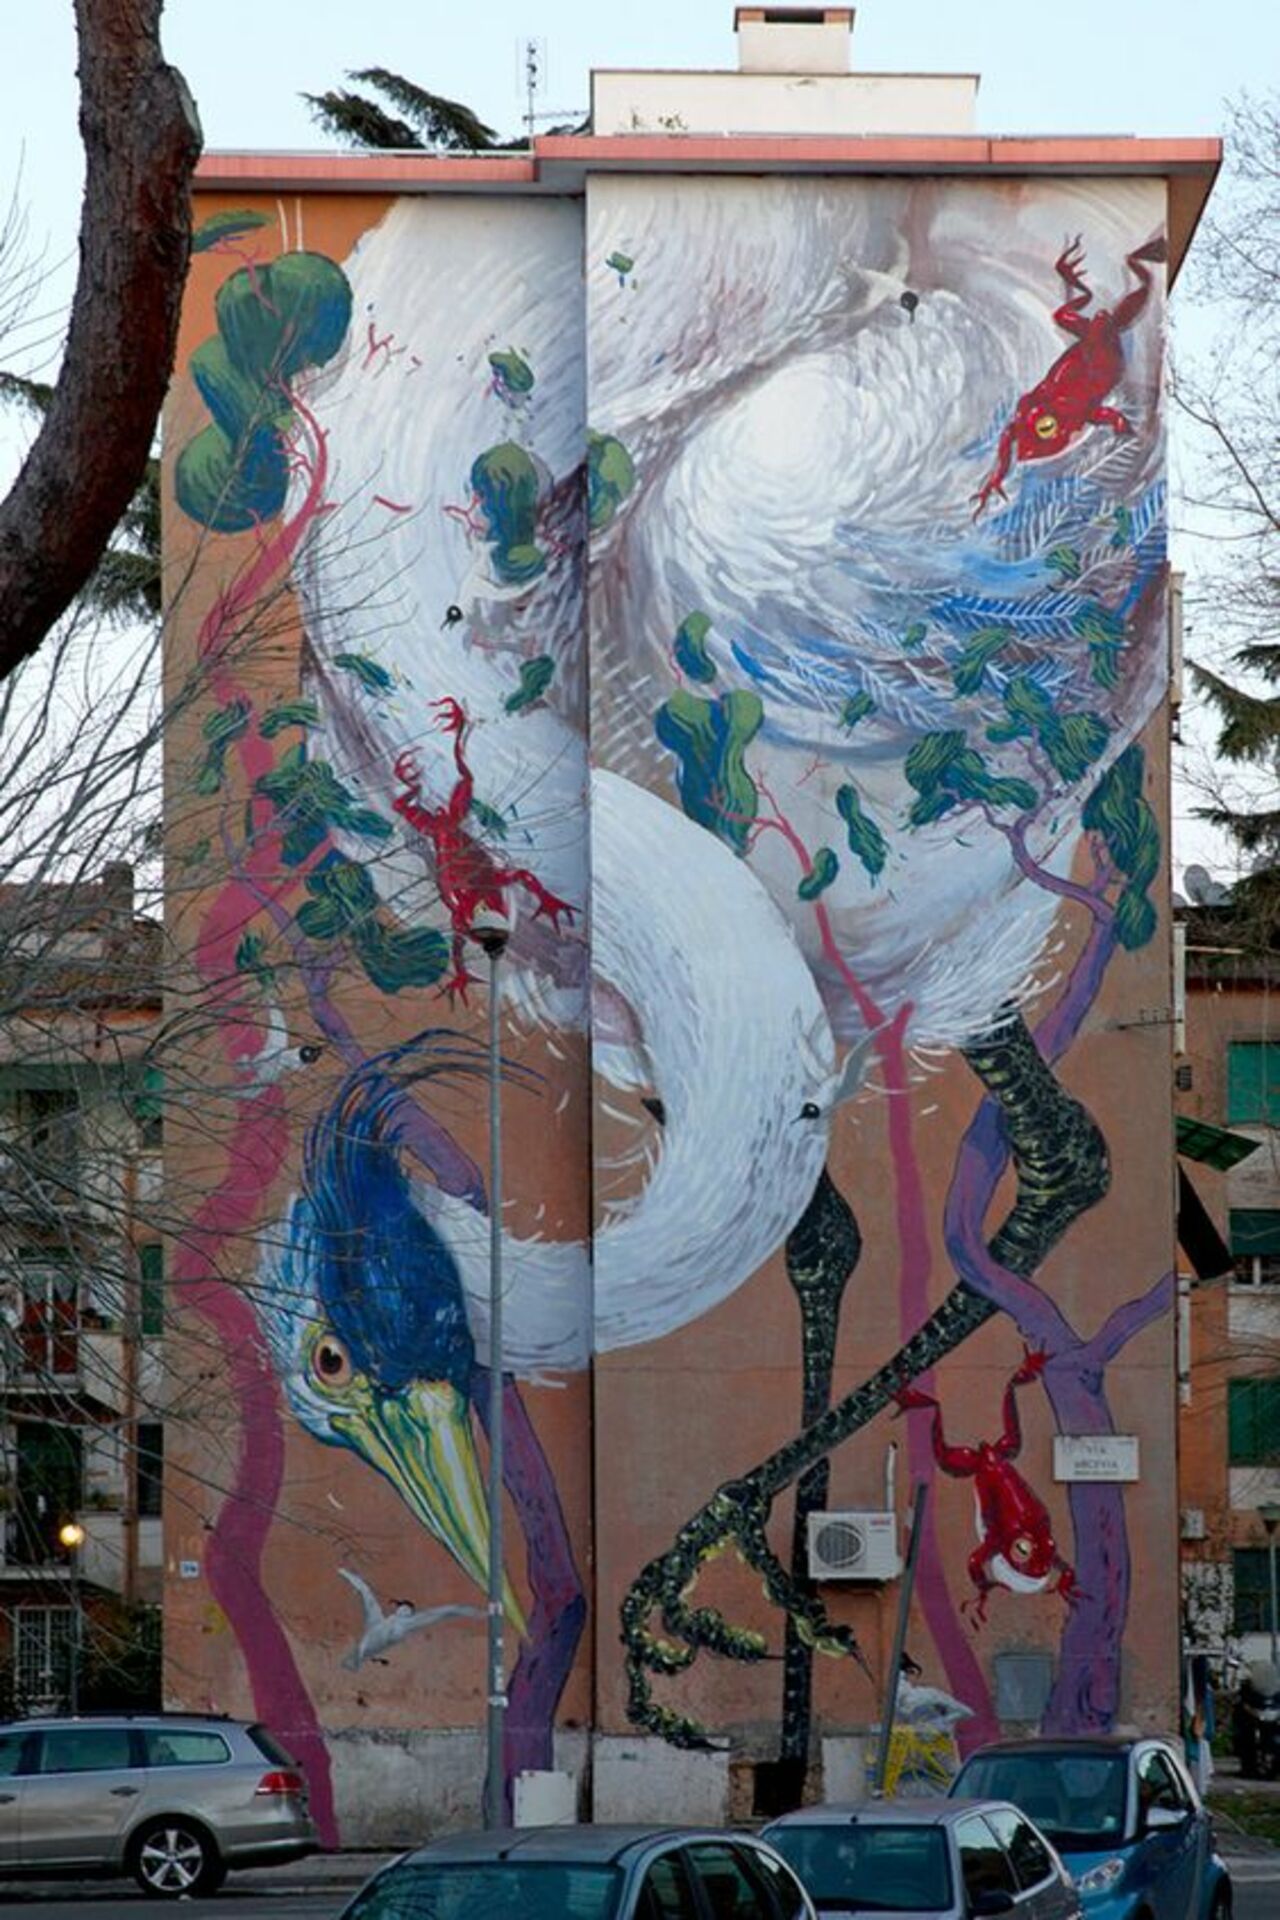 ... like a beautiful bird... with red frogs. Art by Hitnes in Rome, Italy #StreetArt #Art #Birds #Frog #Graffiti #Mural #UrbanArt #Rome https://t.co/rNYTv7eSw7